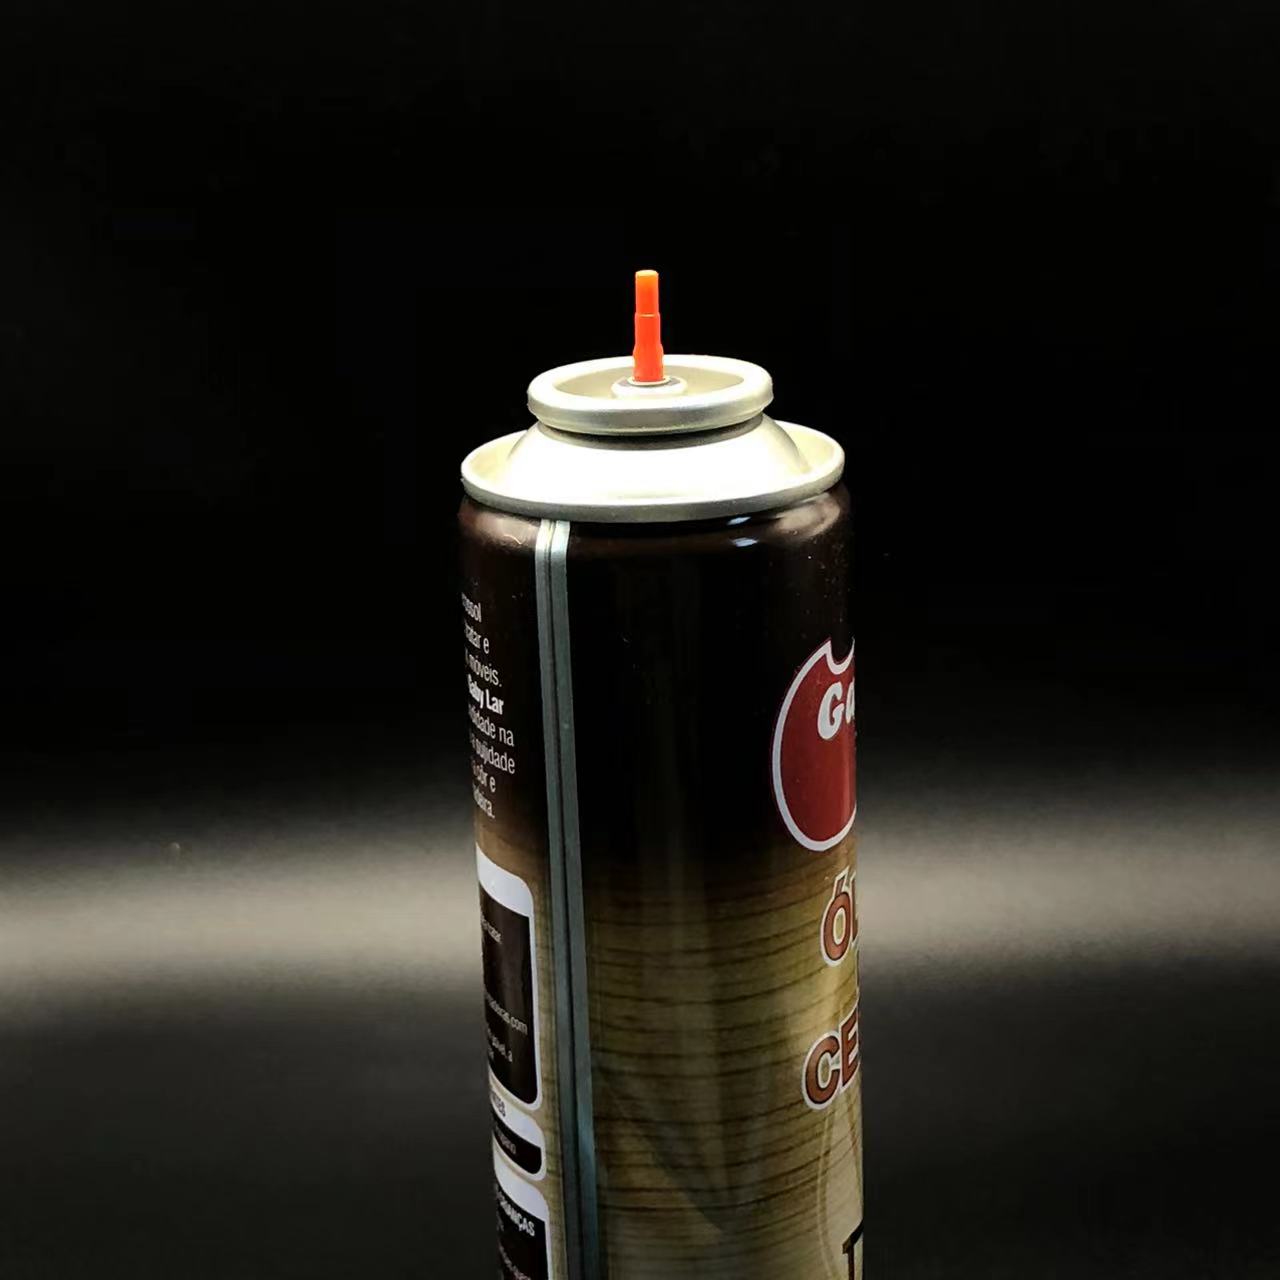 Universal Butan Gas Lighter Refill Ventil kompatibel med forskellige lettere modeller